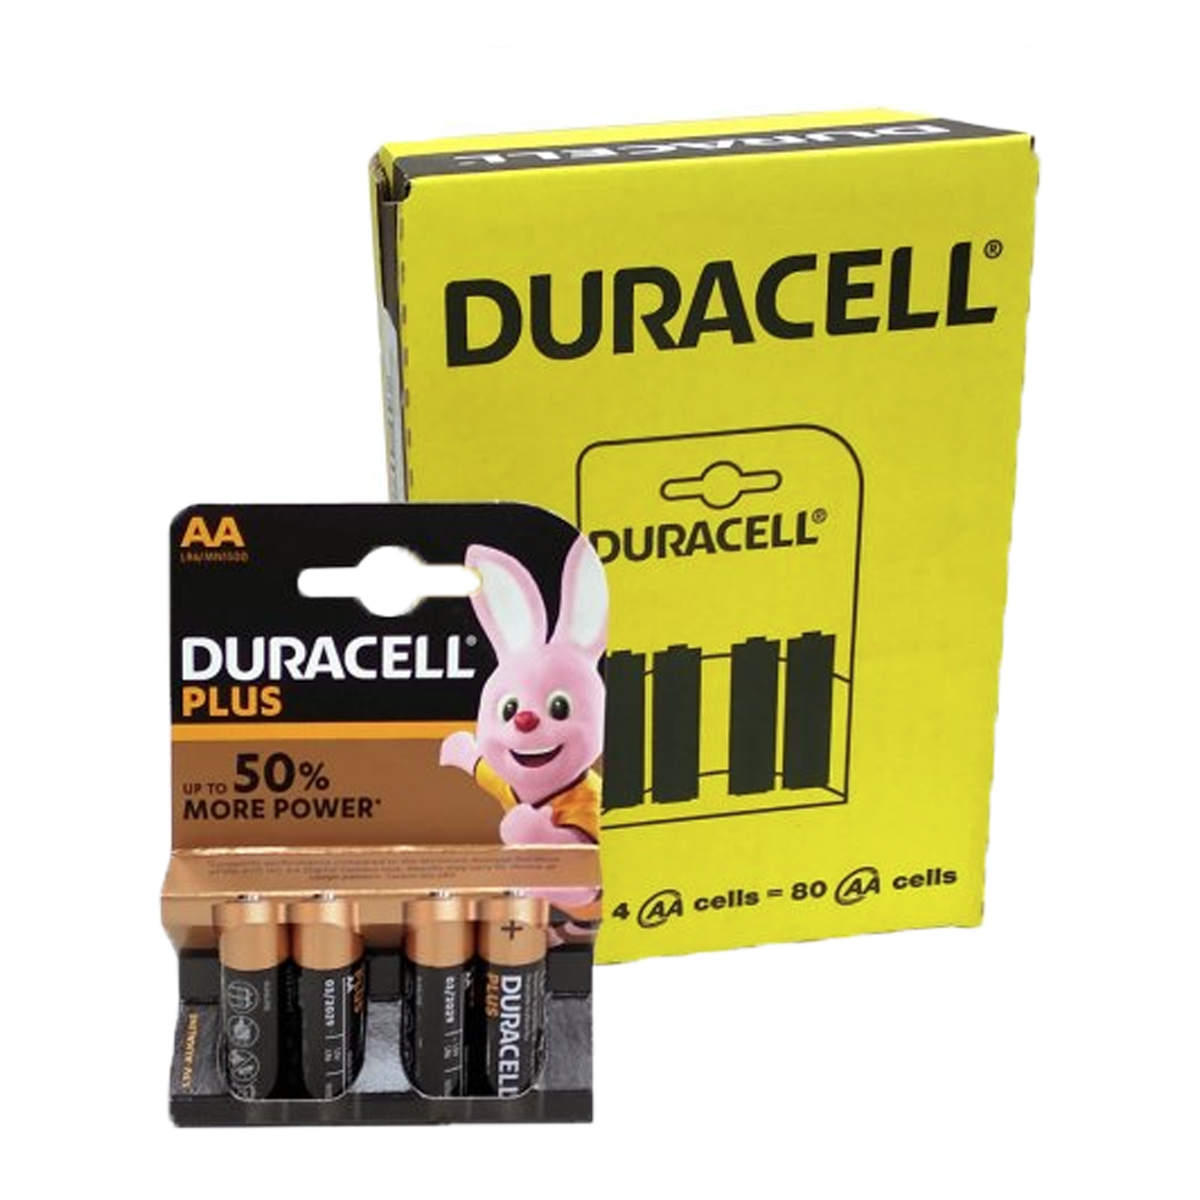 Duracell AA LR06 Plus Batteries (20 Pack)